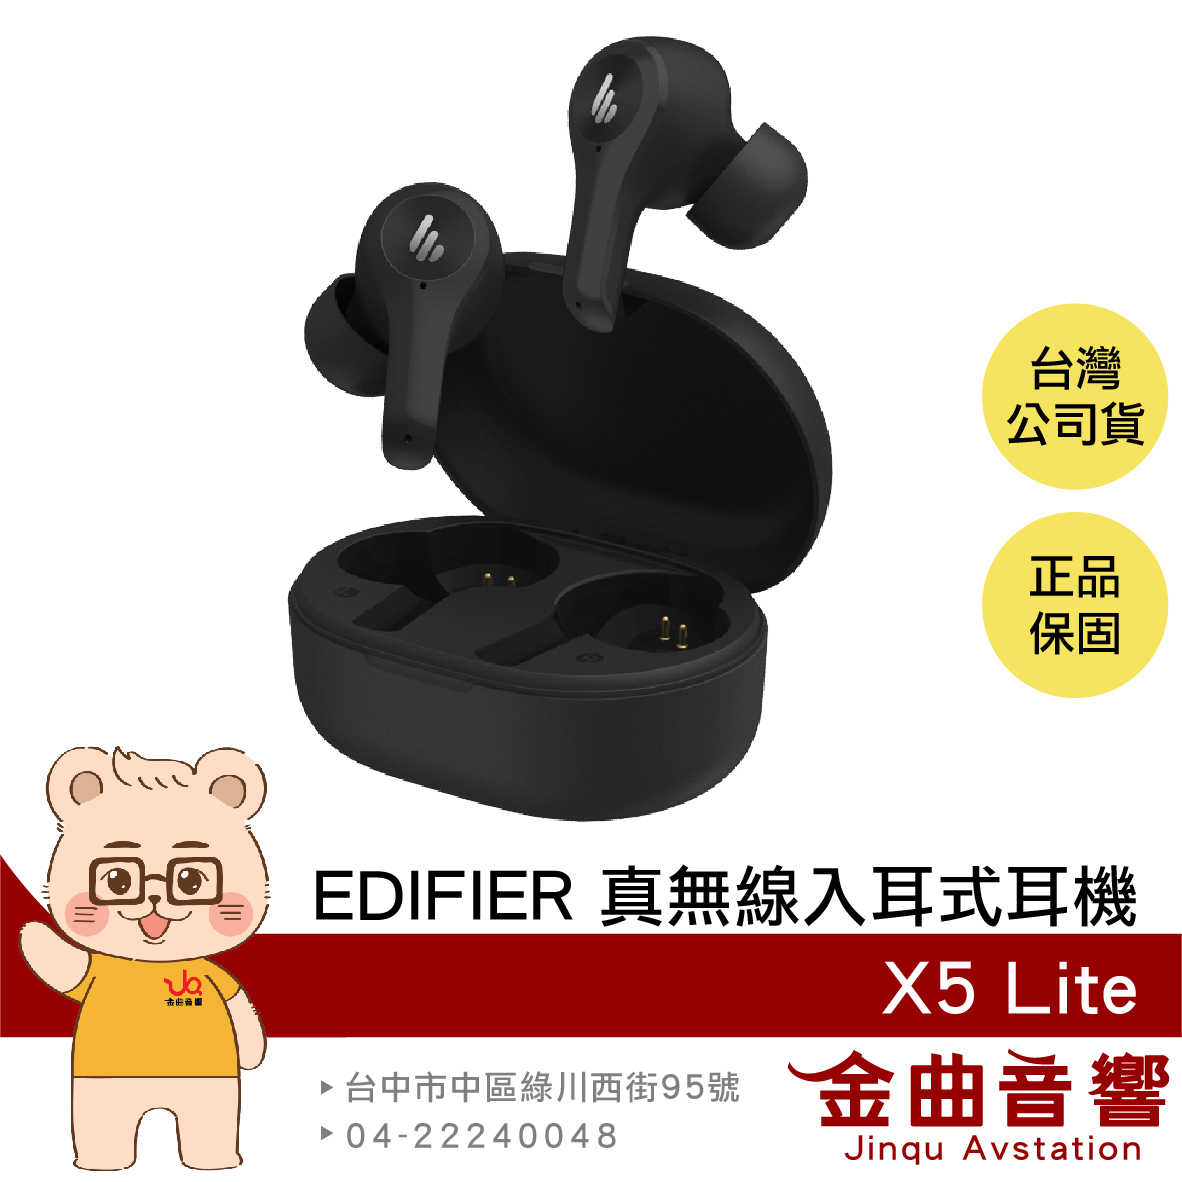 EDIFIER 漫步者 X5 Lite 黑色 通話降噪 低延遲 IP55防塵防水 真無線 入耳式 耳機 | 金曲音響